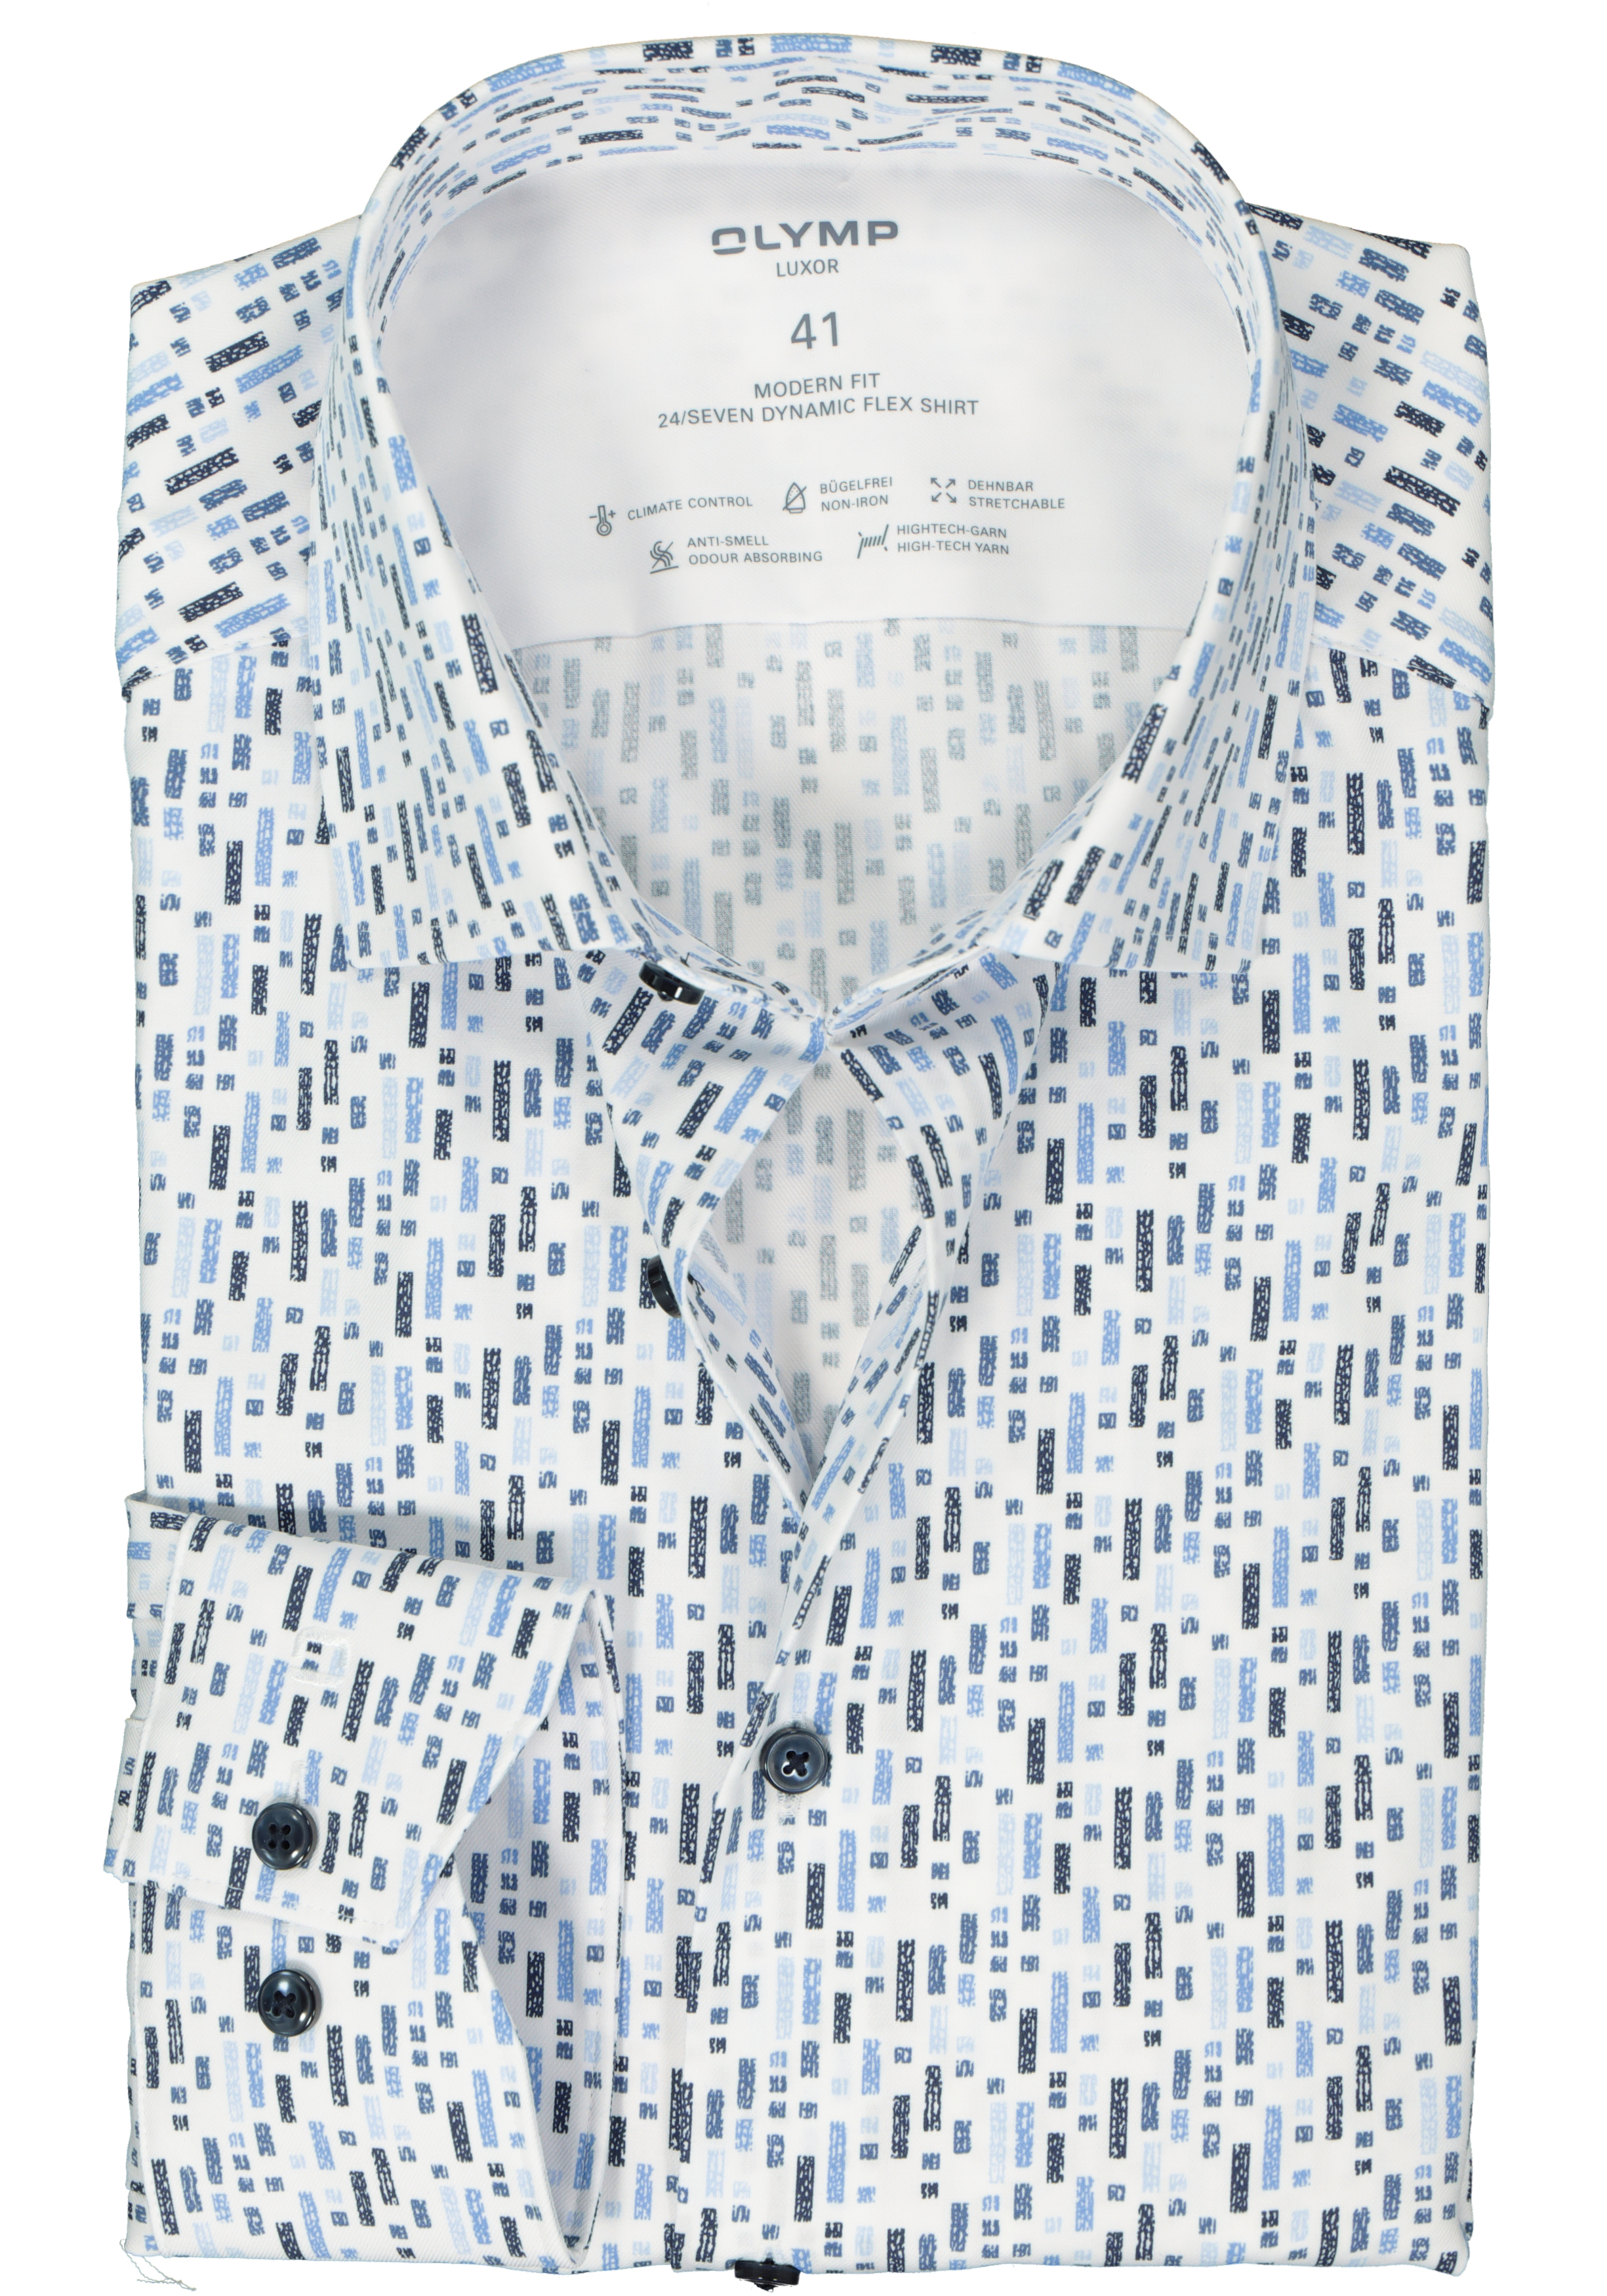 OLYMP 24/7 modern fit overhemd, twill, wit met blauw dessin